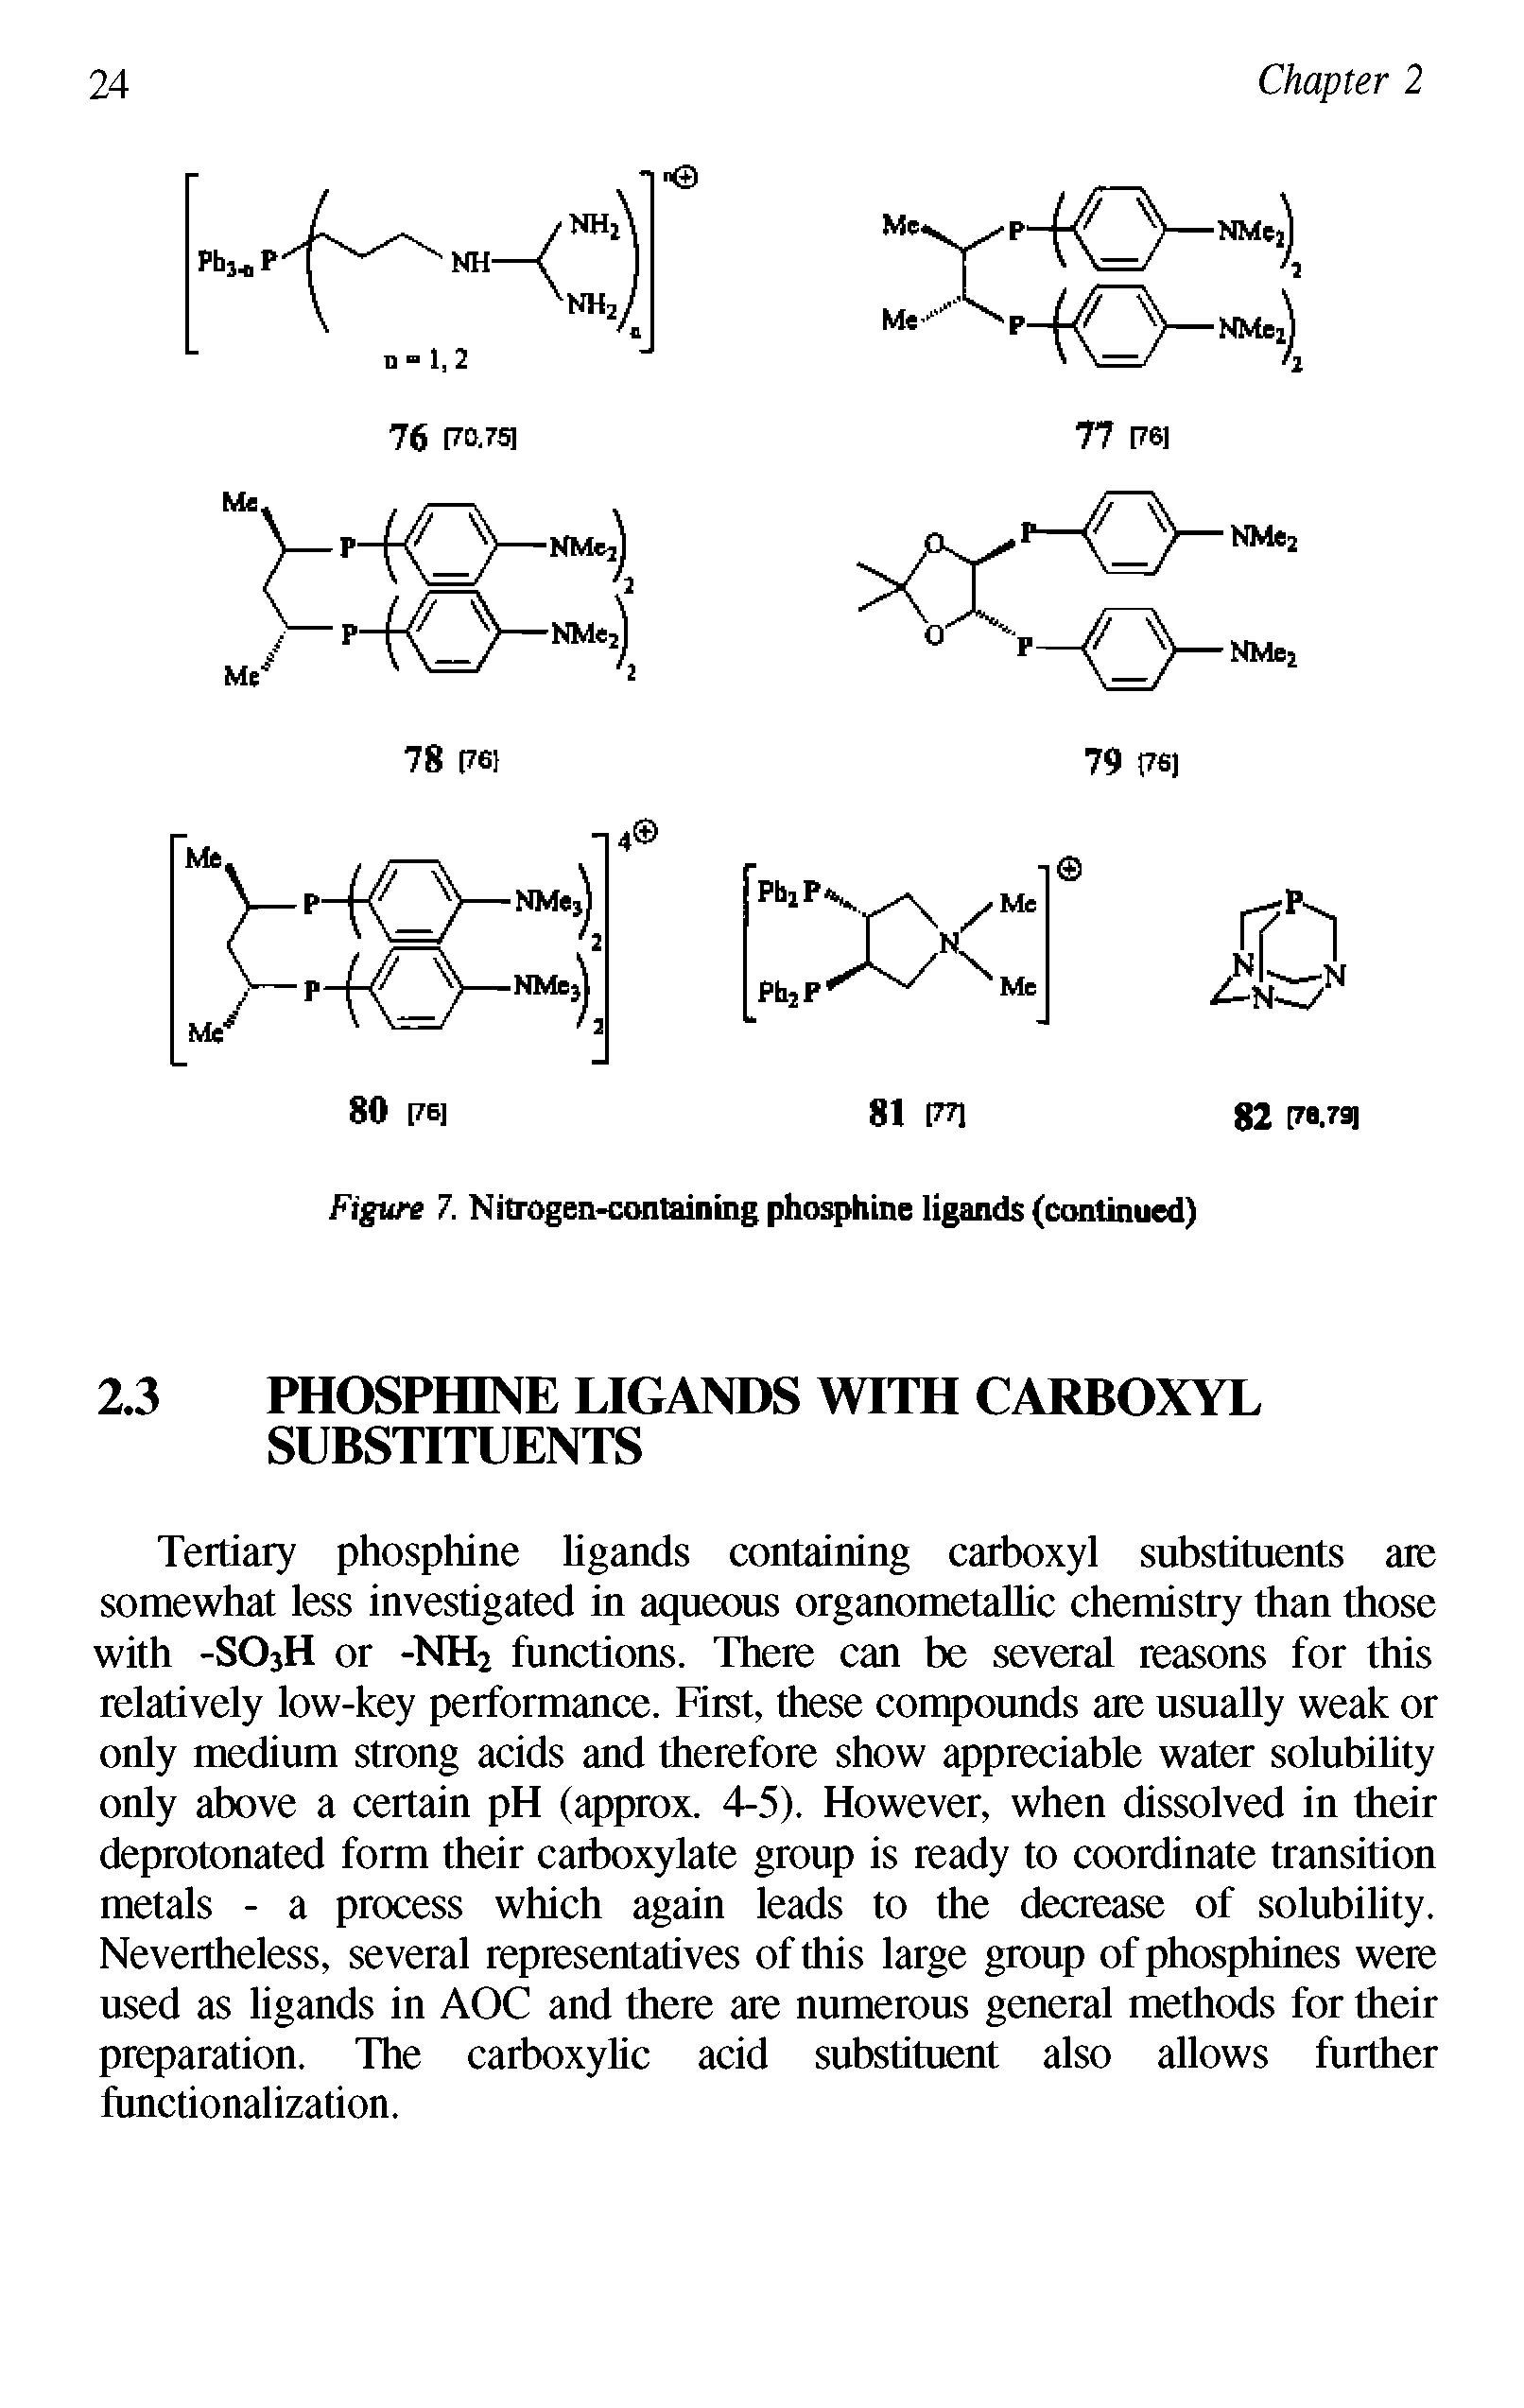 Figure 7. Nitrogen-containing phosphine ligands (continued)...